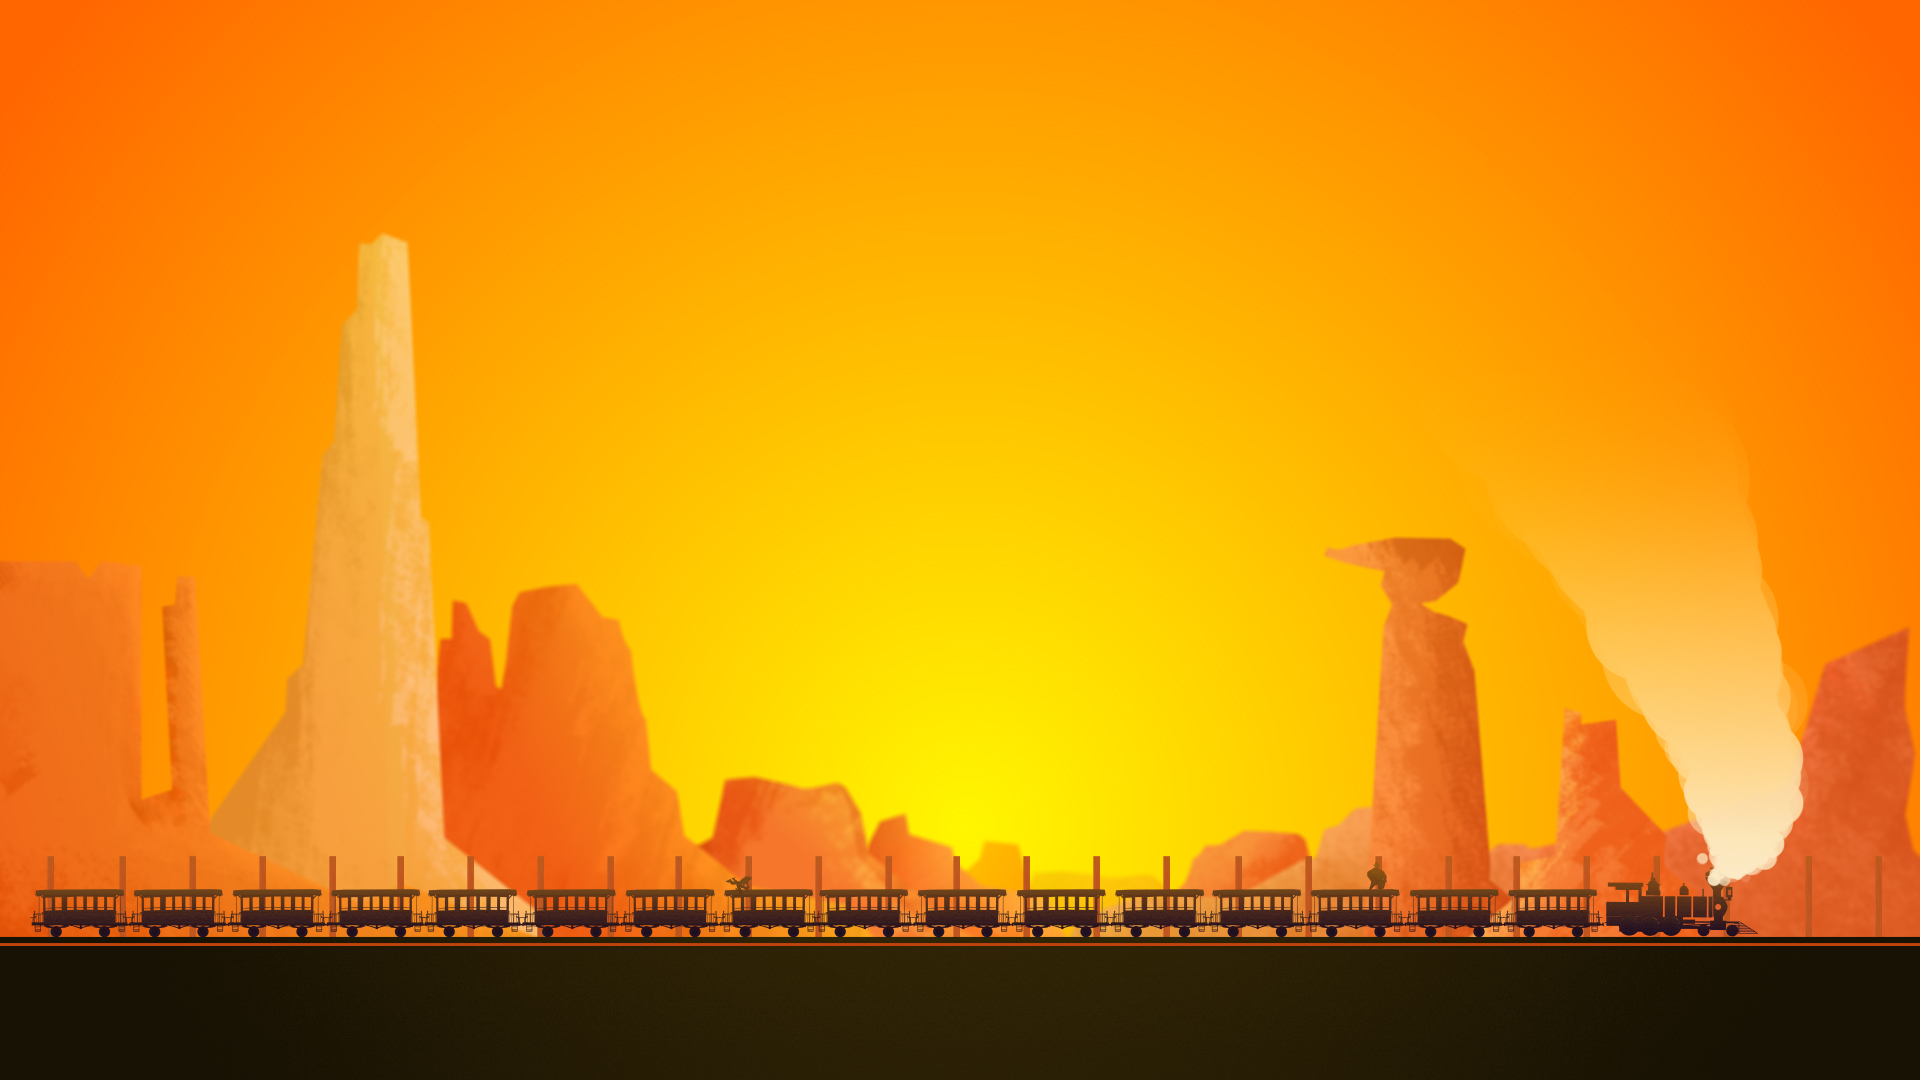 westworld animated music video western train desert